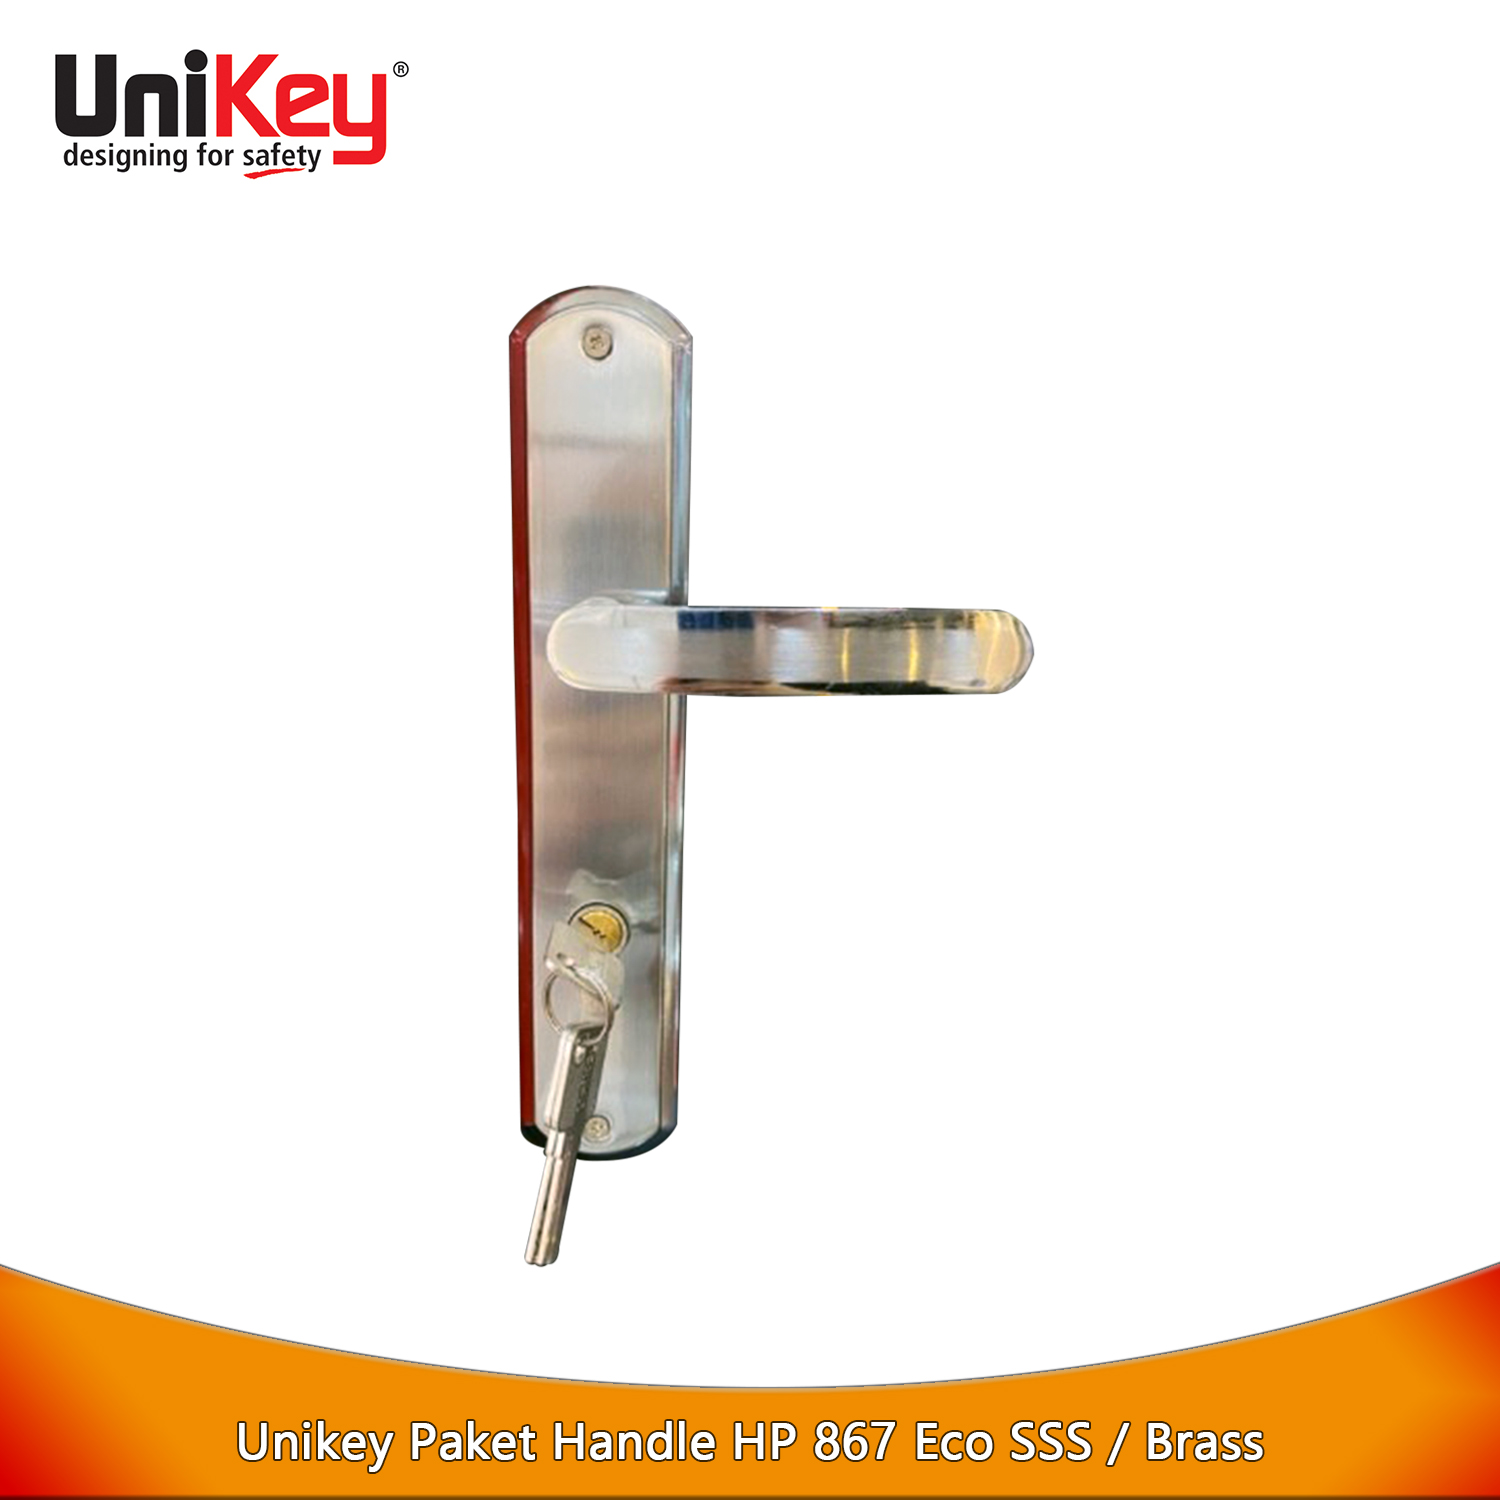 Unikey Paket Handle HP 867 Eco SSS / Brass